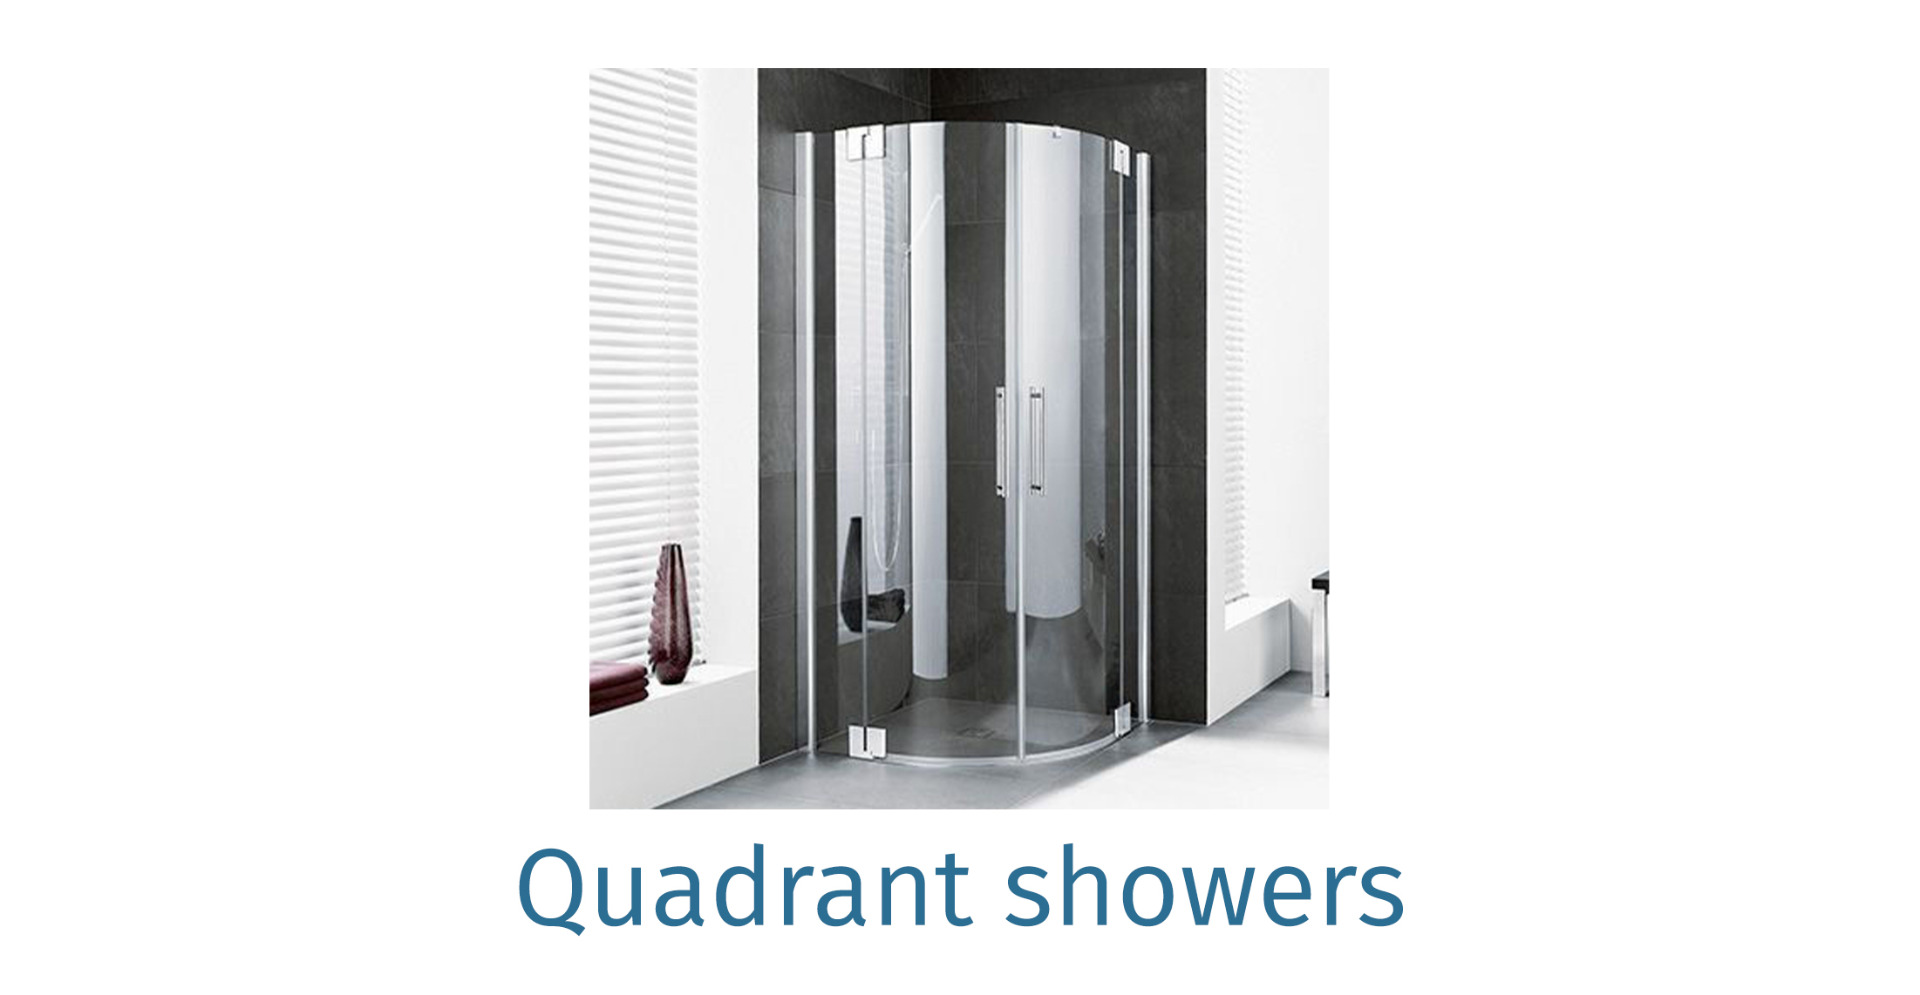 Quadrant showers